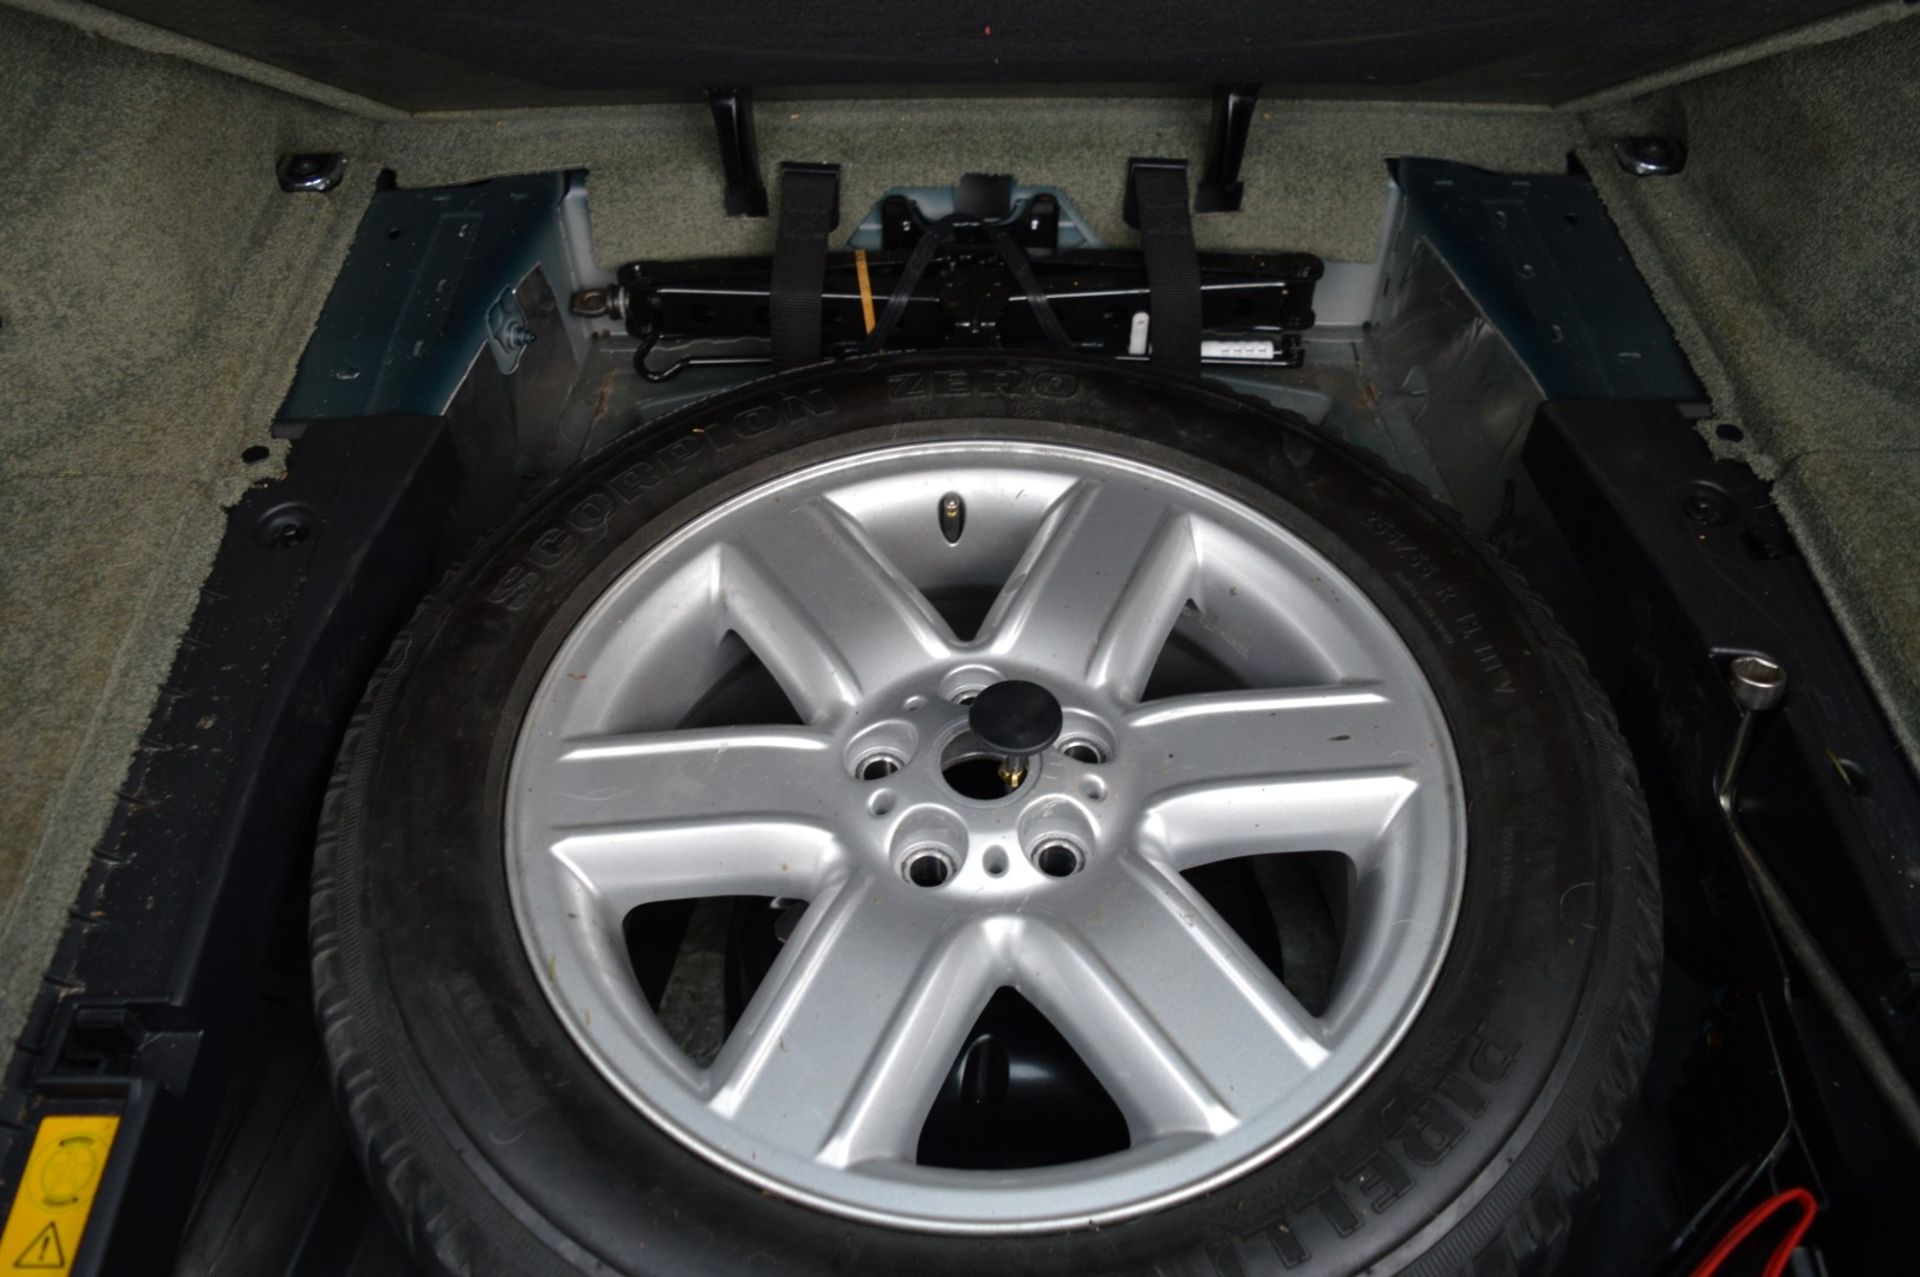 1 x Range Rover Vogue V8 4.4 Automatic - Black, Leather Interior, Petrol, Television, Premium - Image 21 of 63